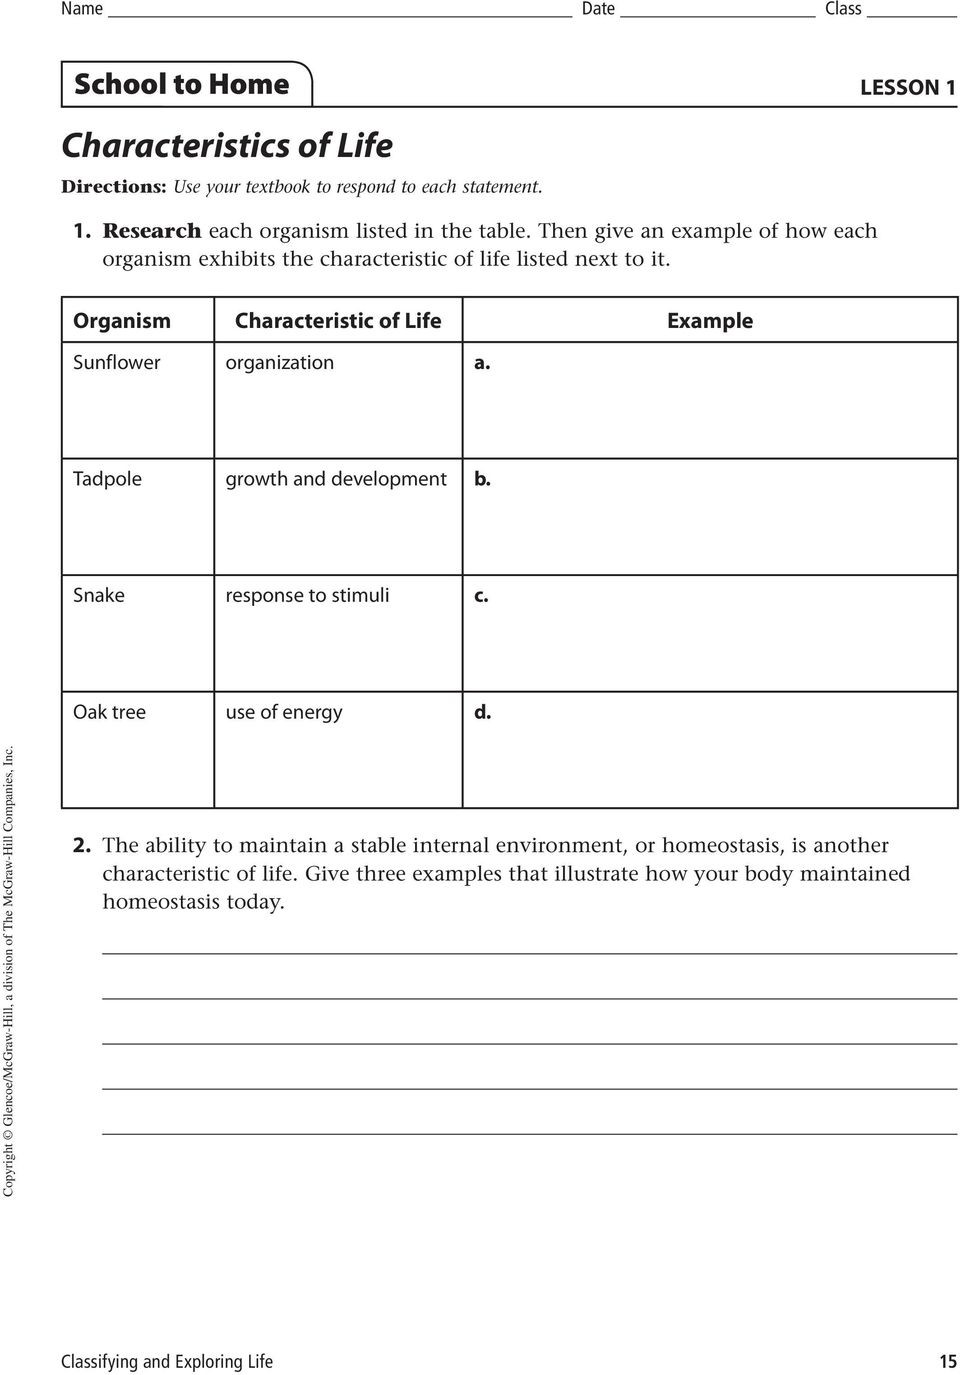 Characteristics Of Life Worksheet Lesson 1 Characteristics Of Life Pdf Free Download